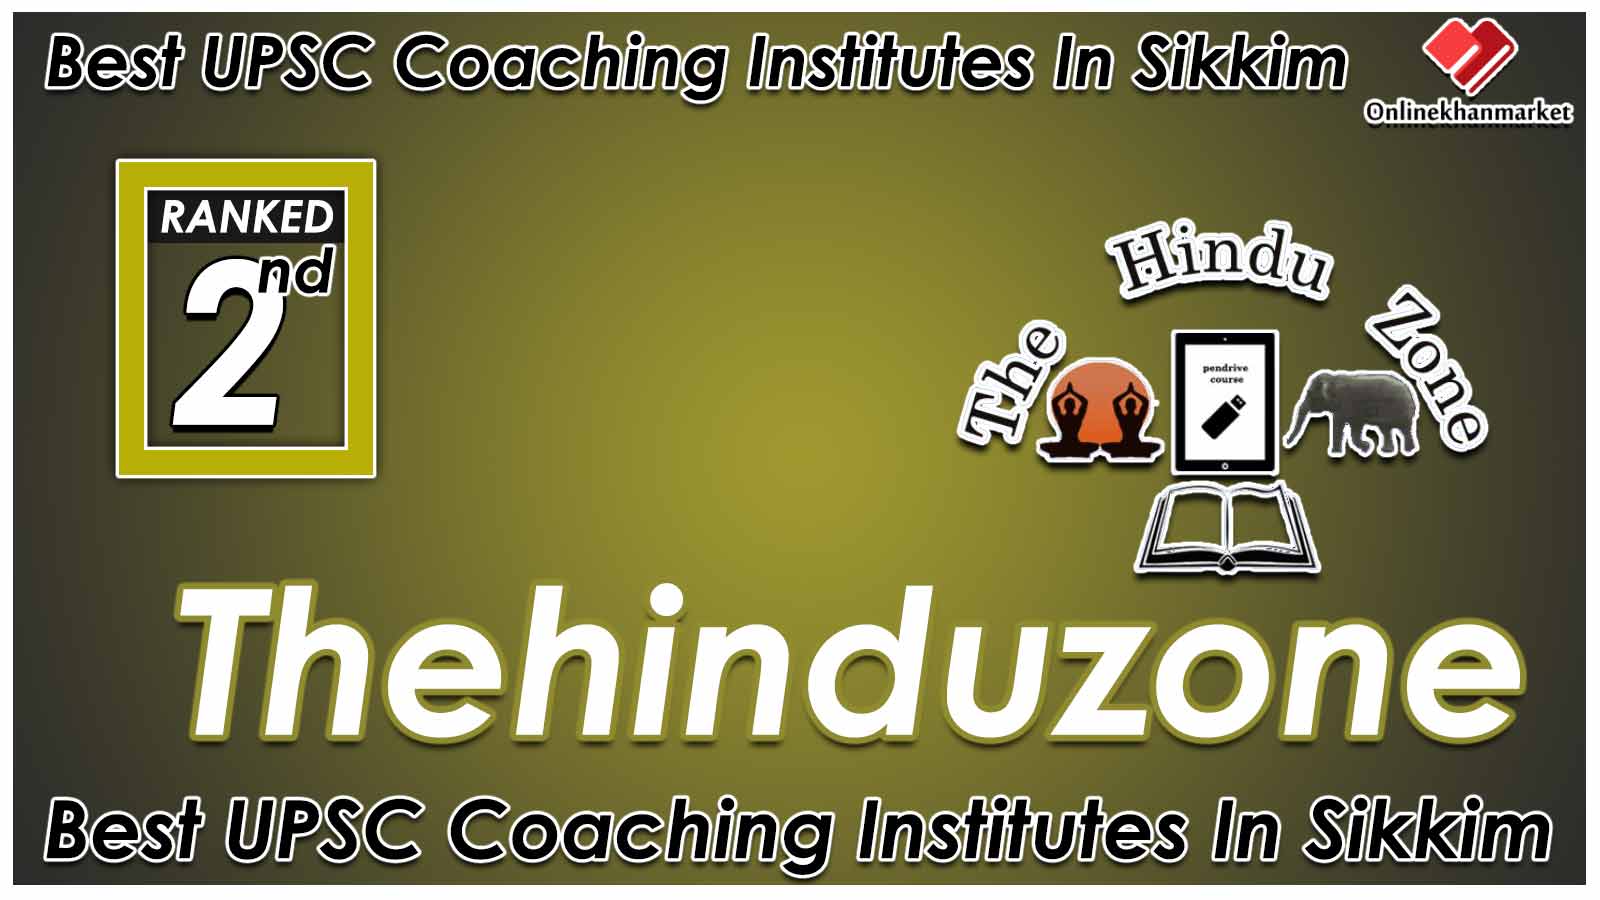 Best IAS Coaching in Sikkim